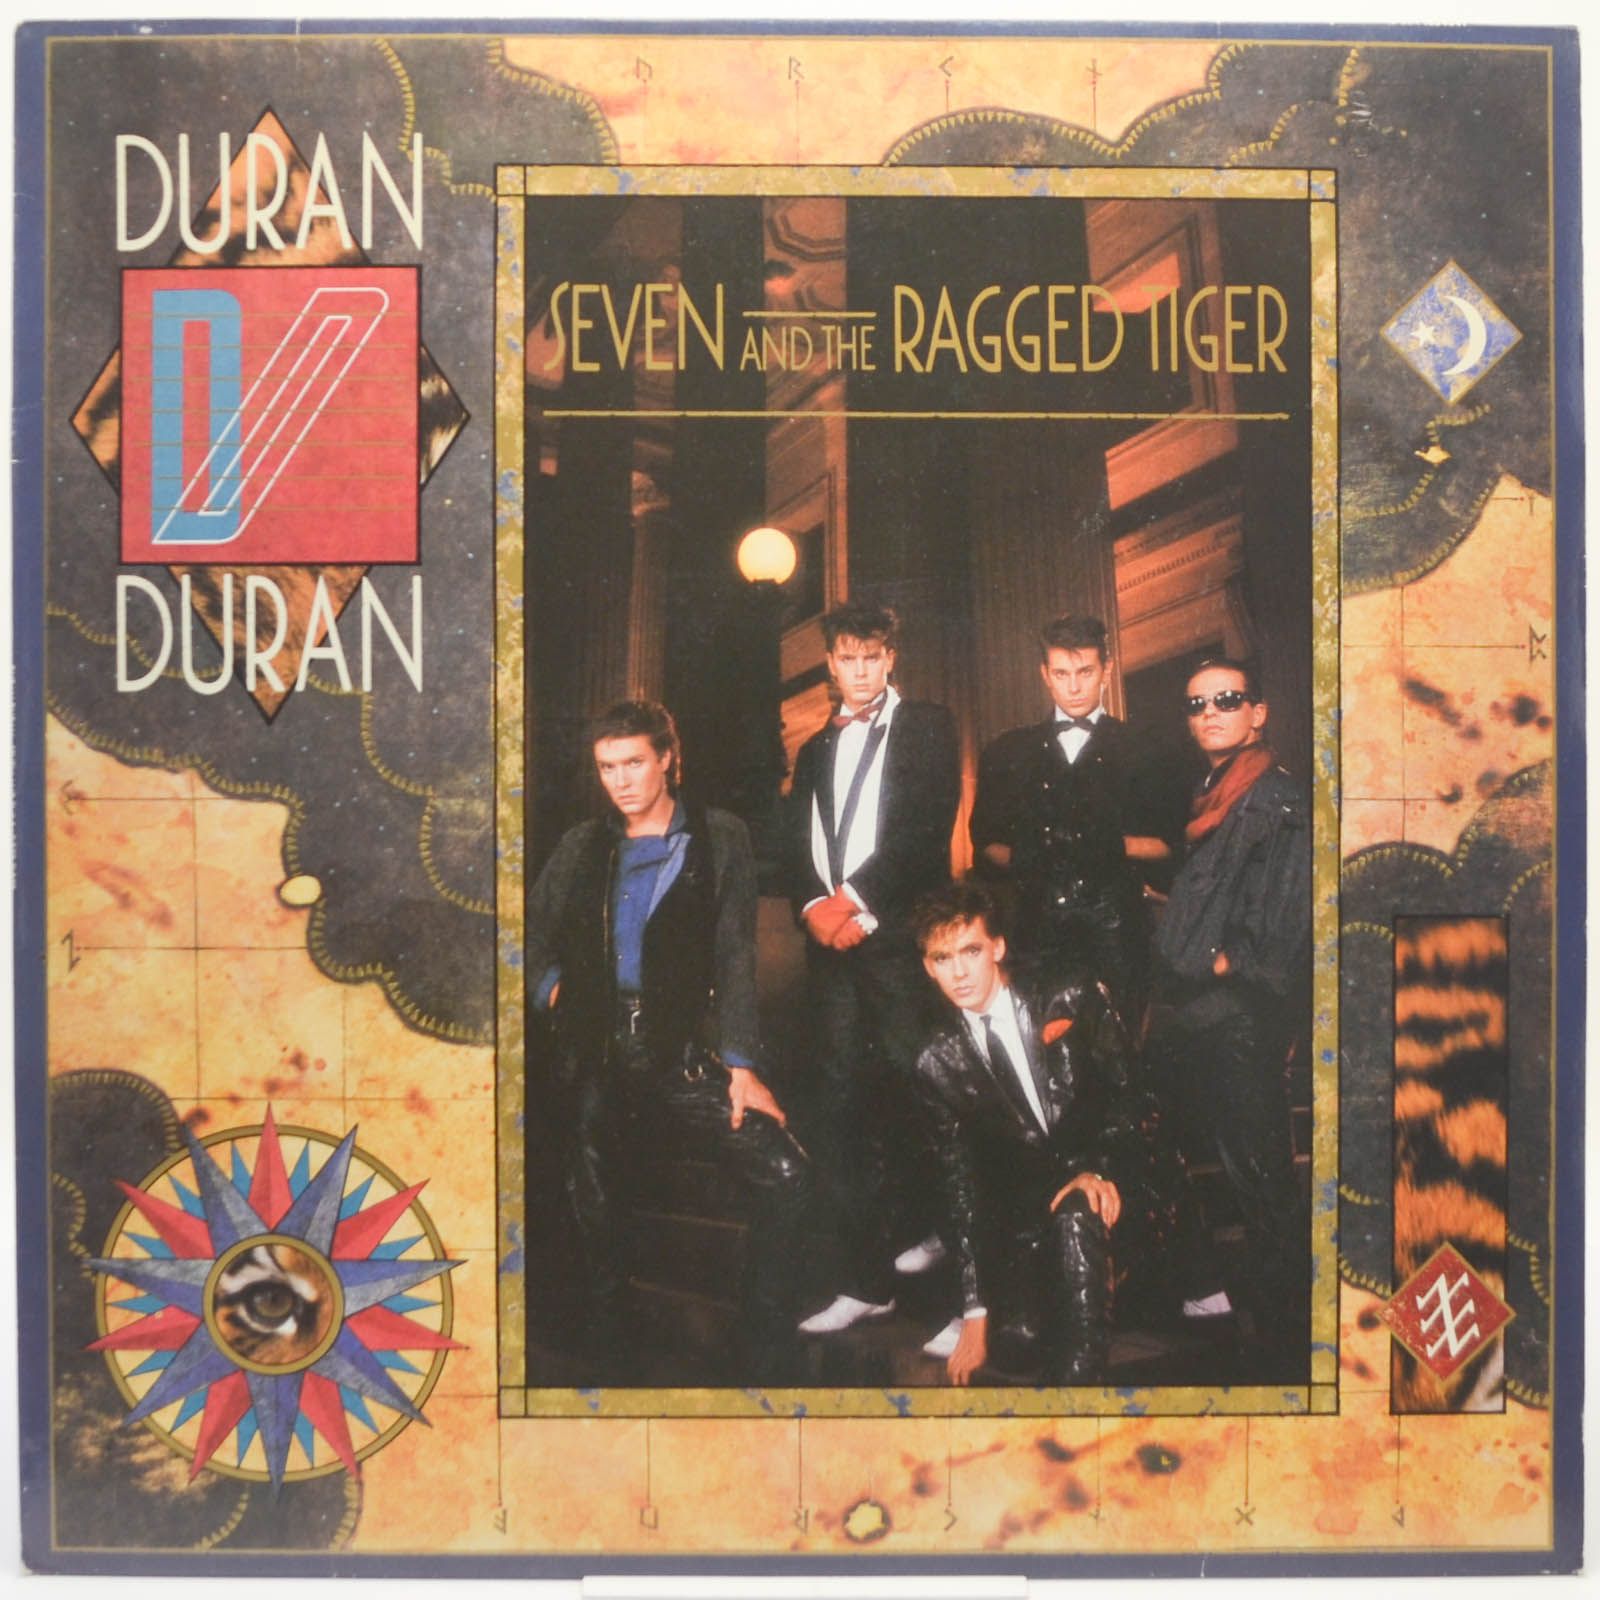 Duran Duran — Seven And The Ragged Tiger, 1983